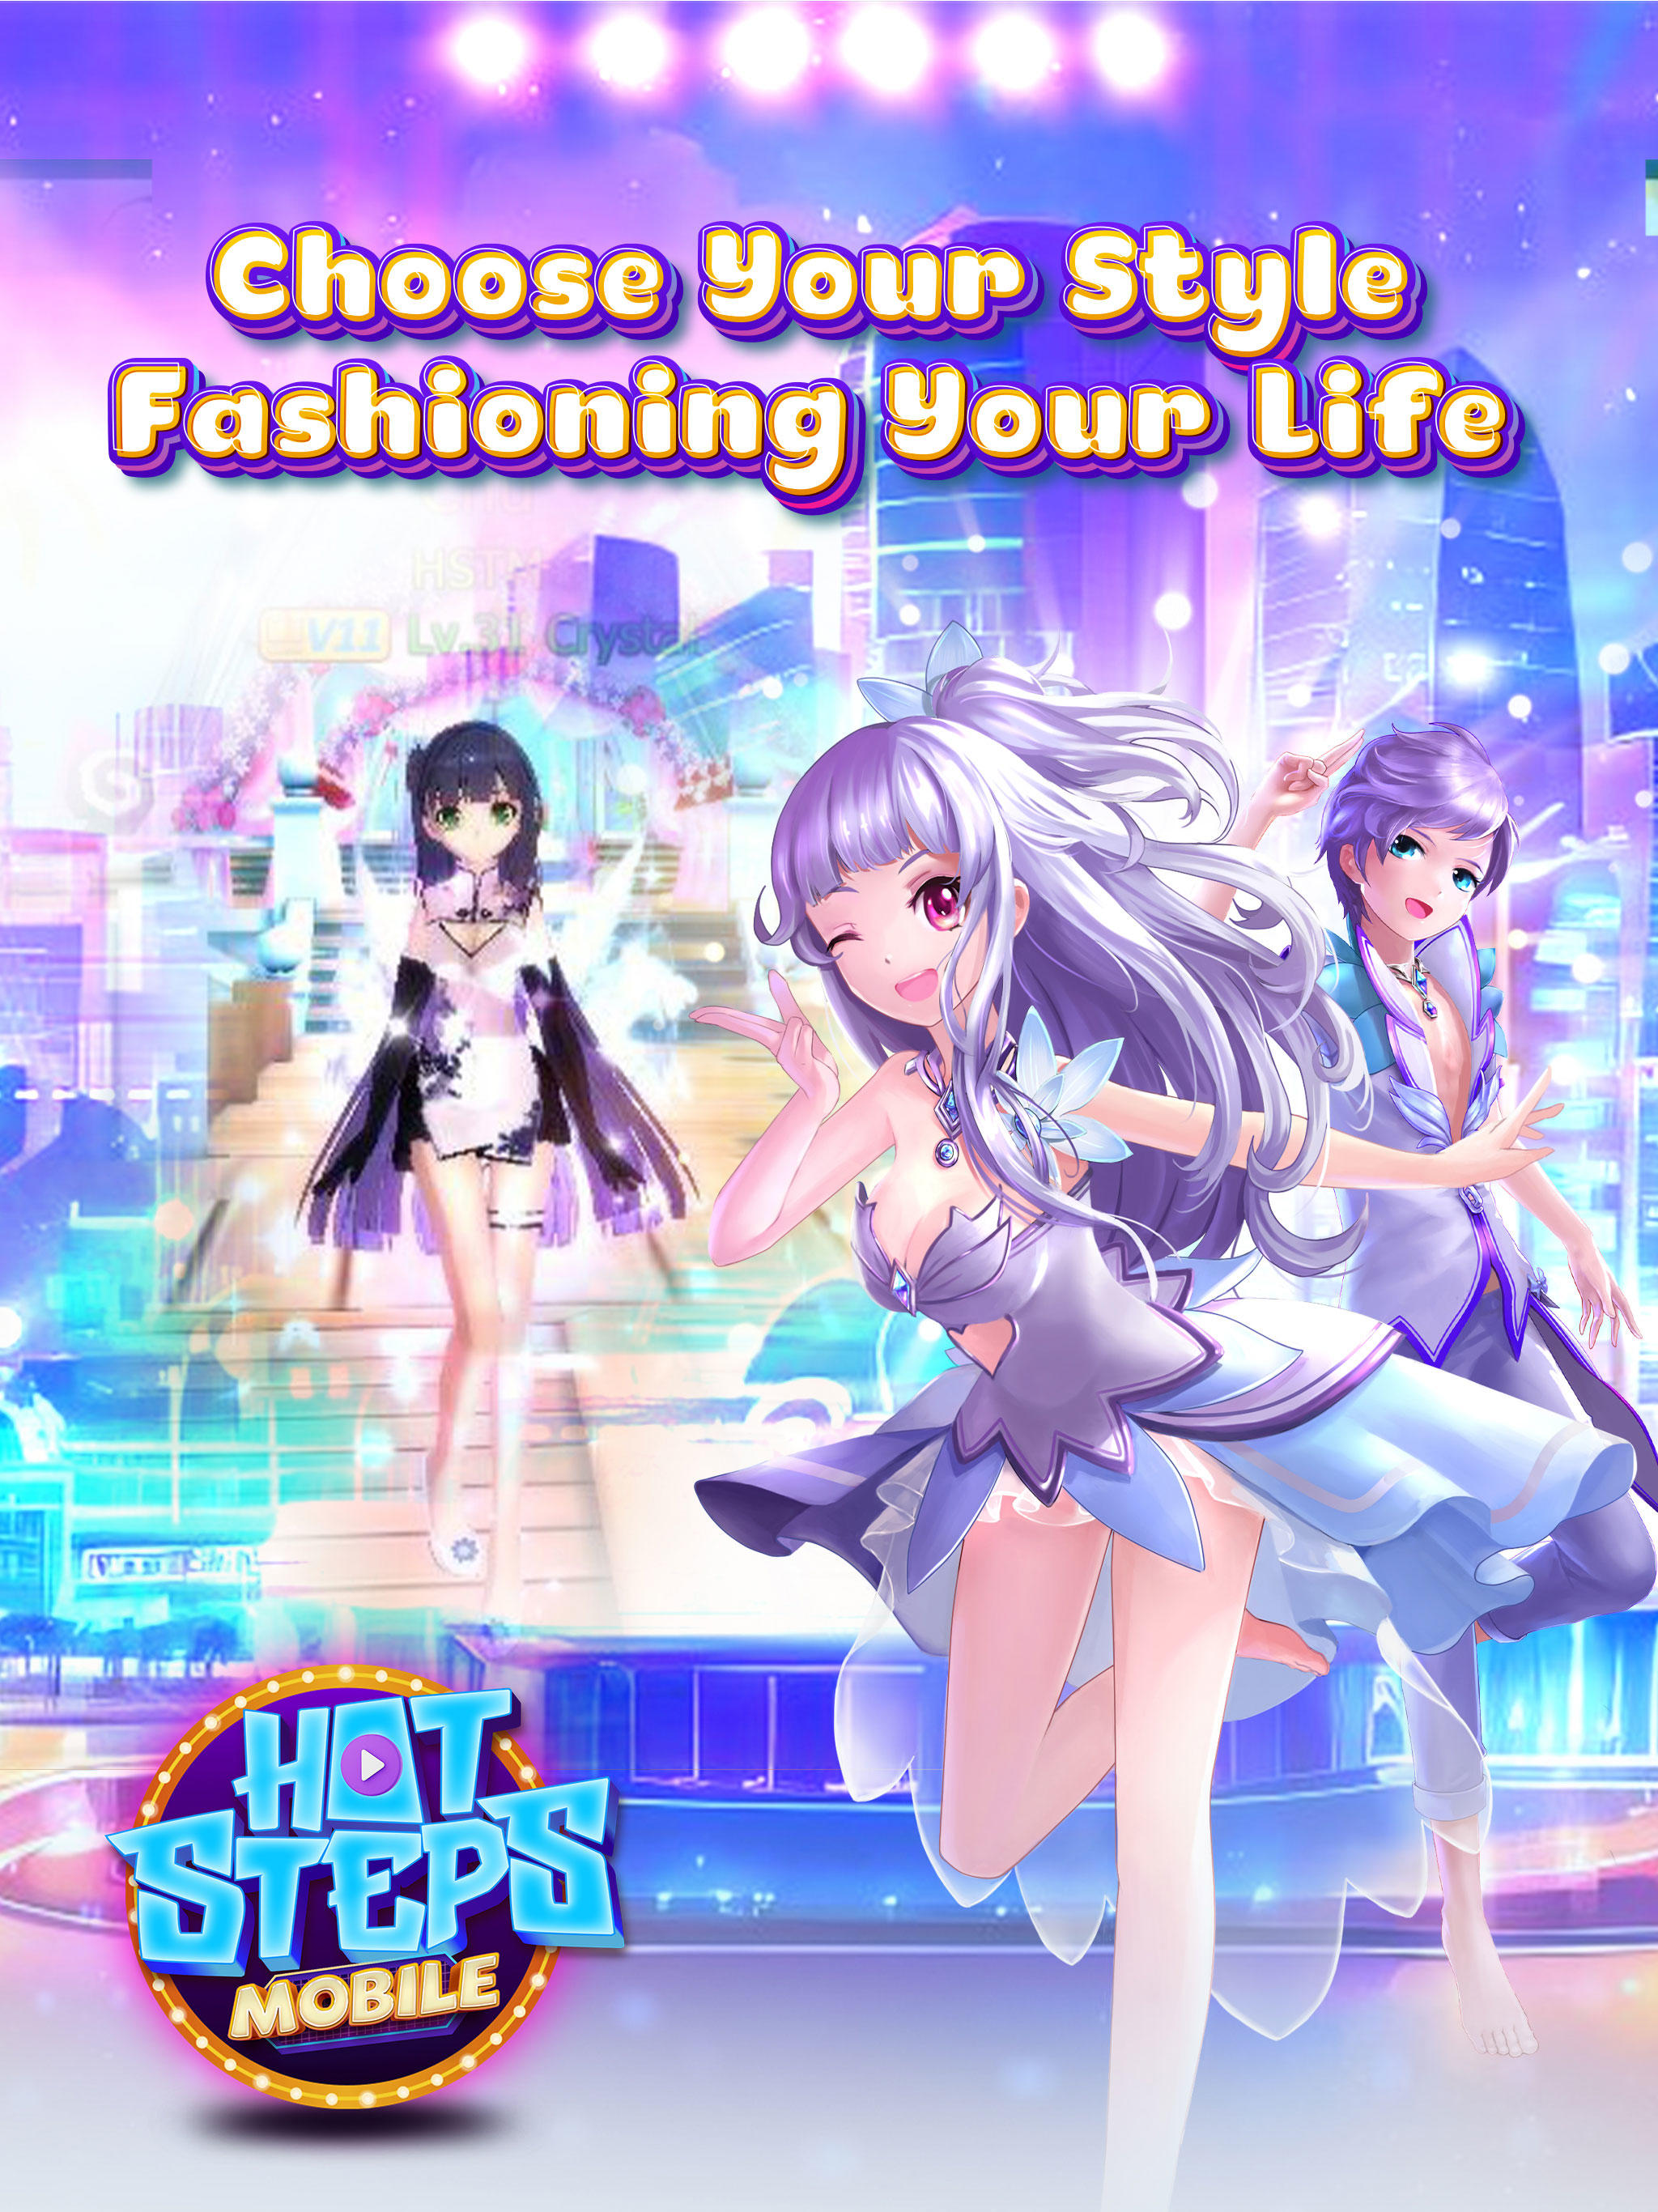 Dance On - Hotsteps Mobile screenshot game